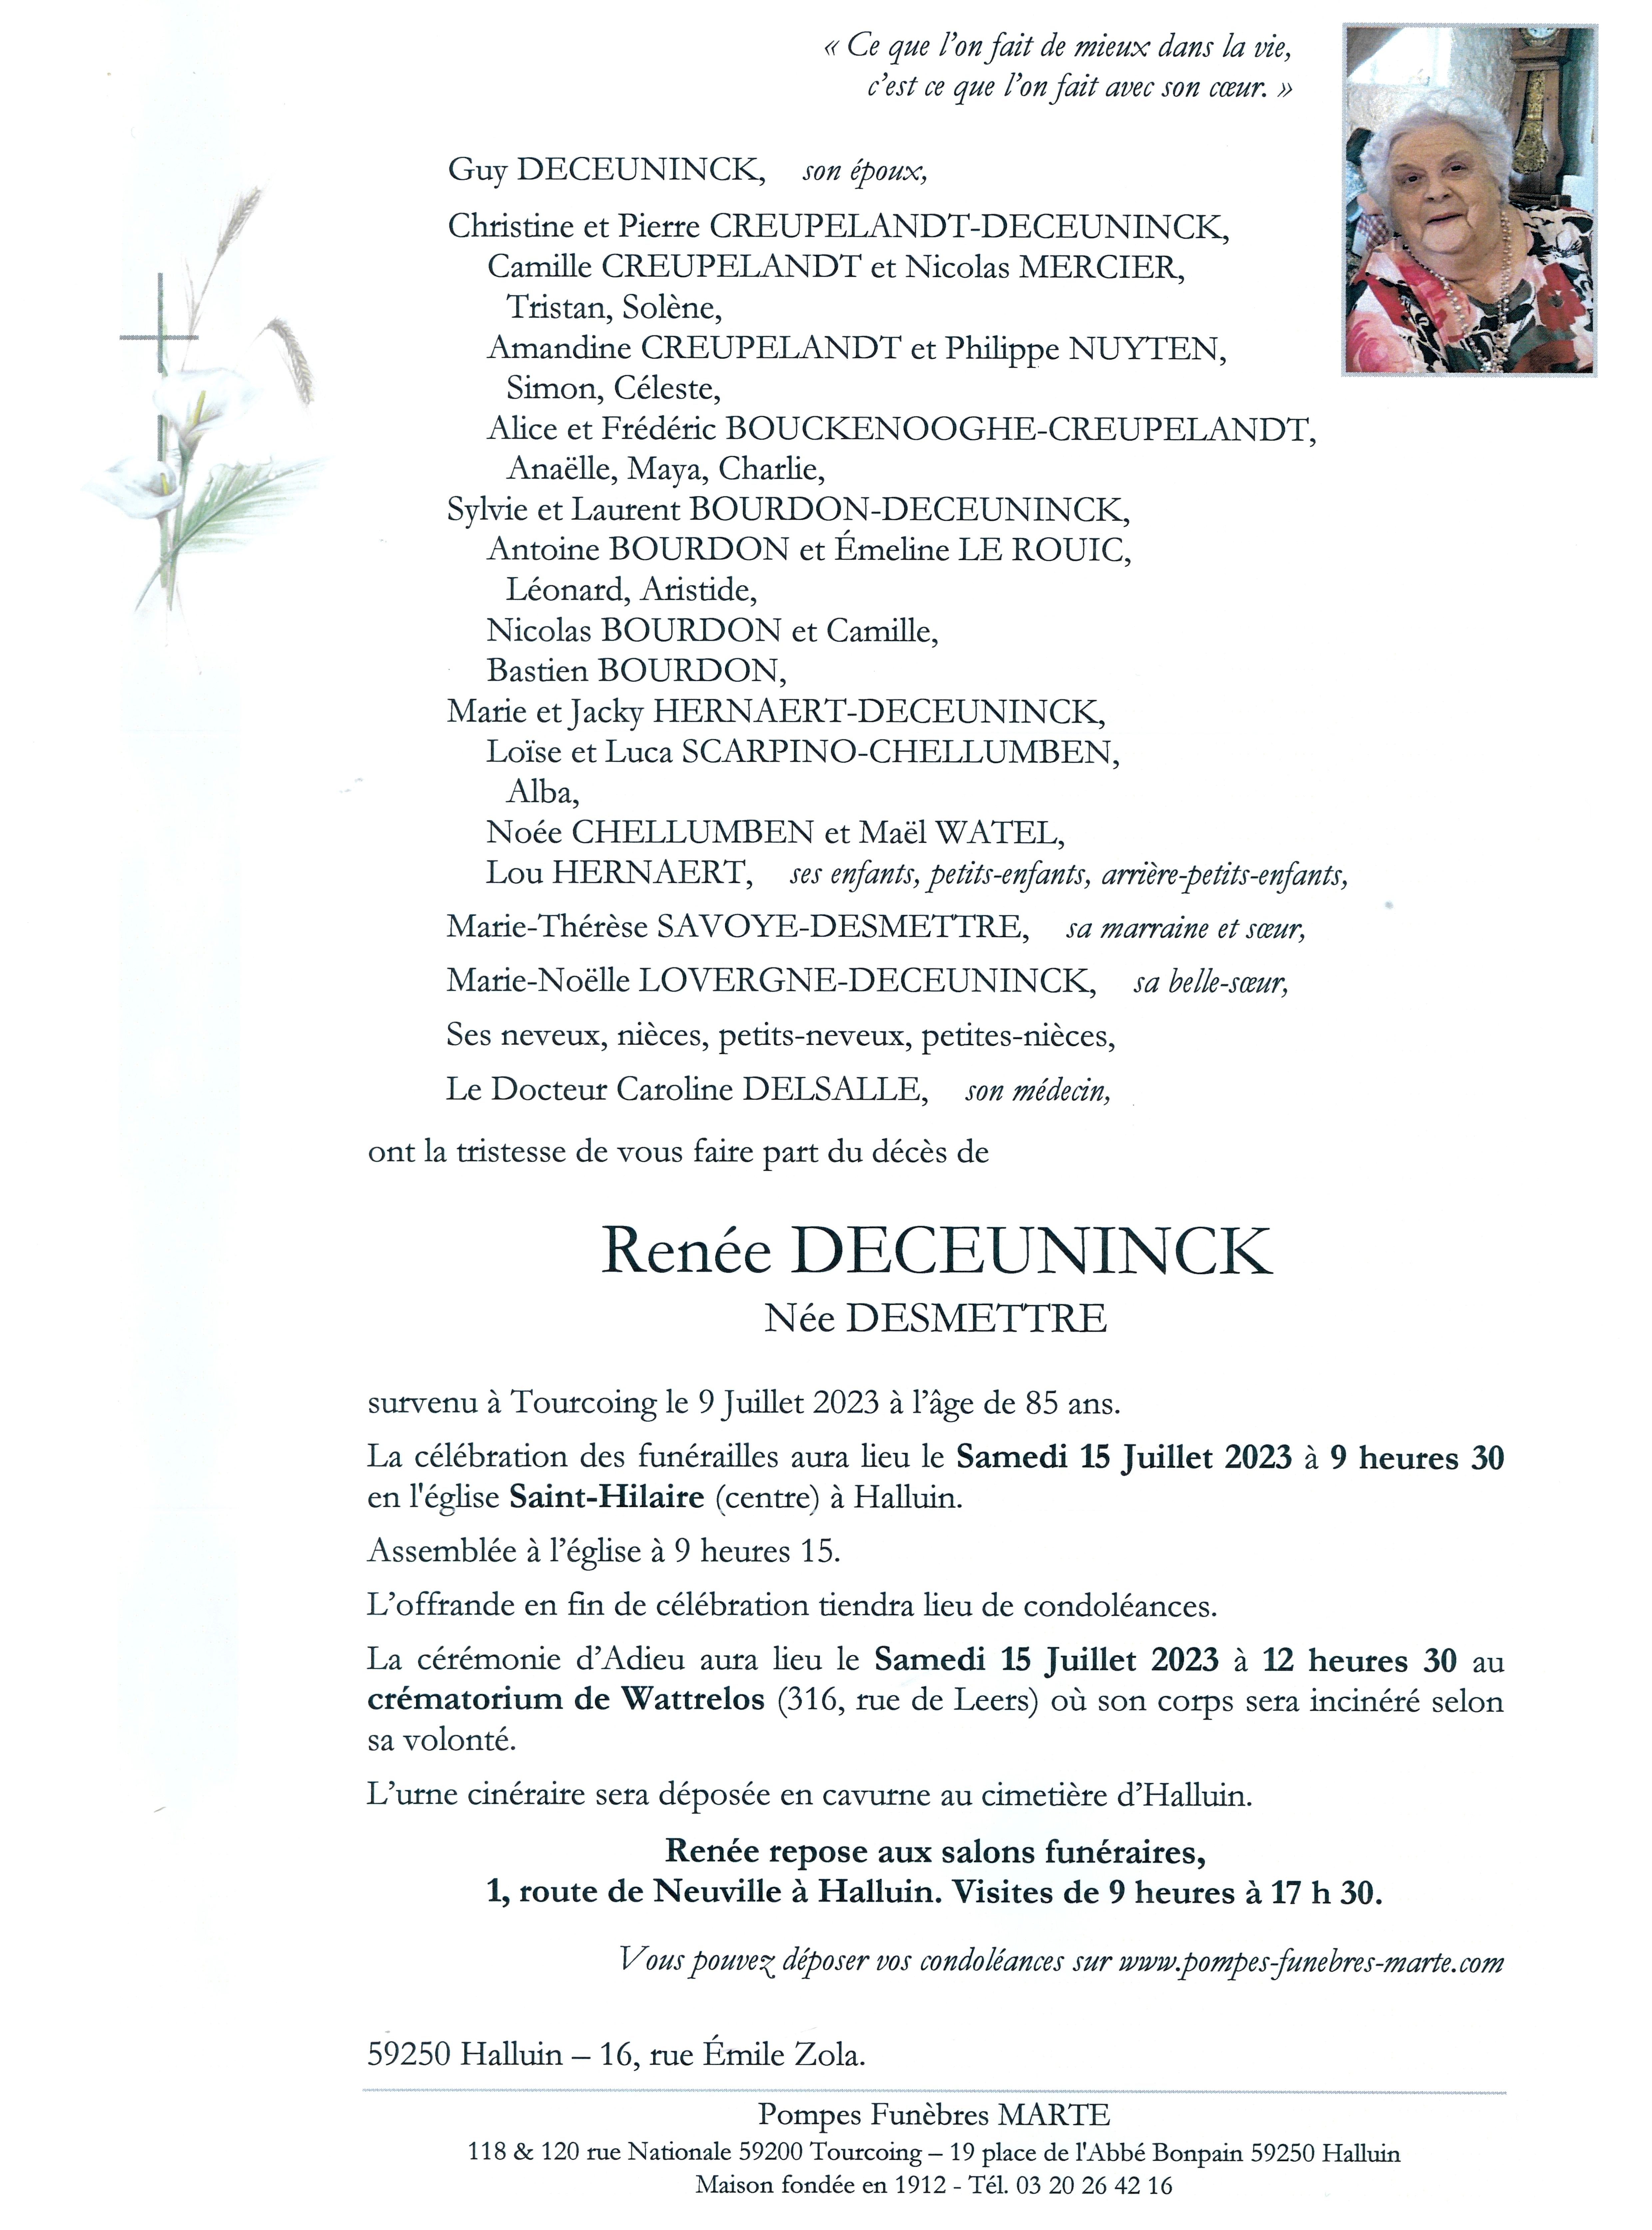 Rene DECEUNINCK DESMETTRE Faire part 1